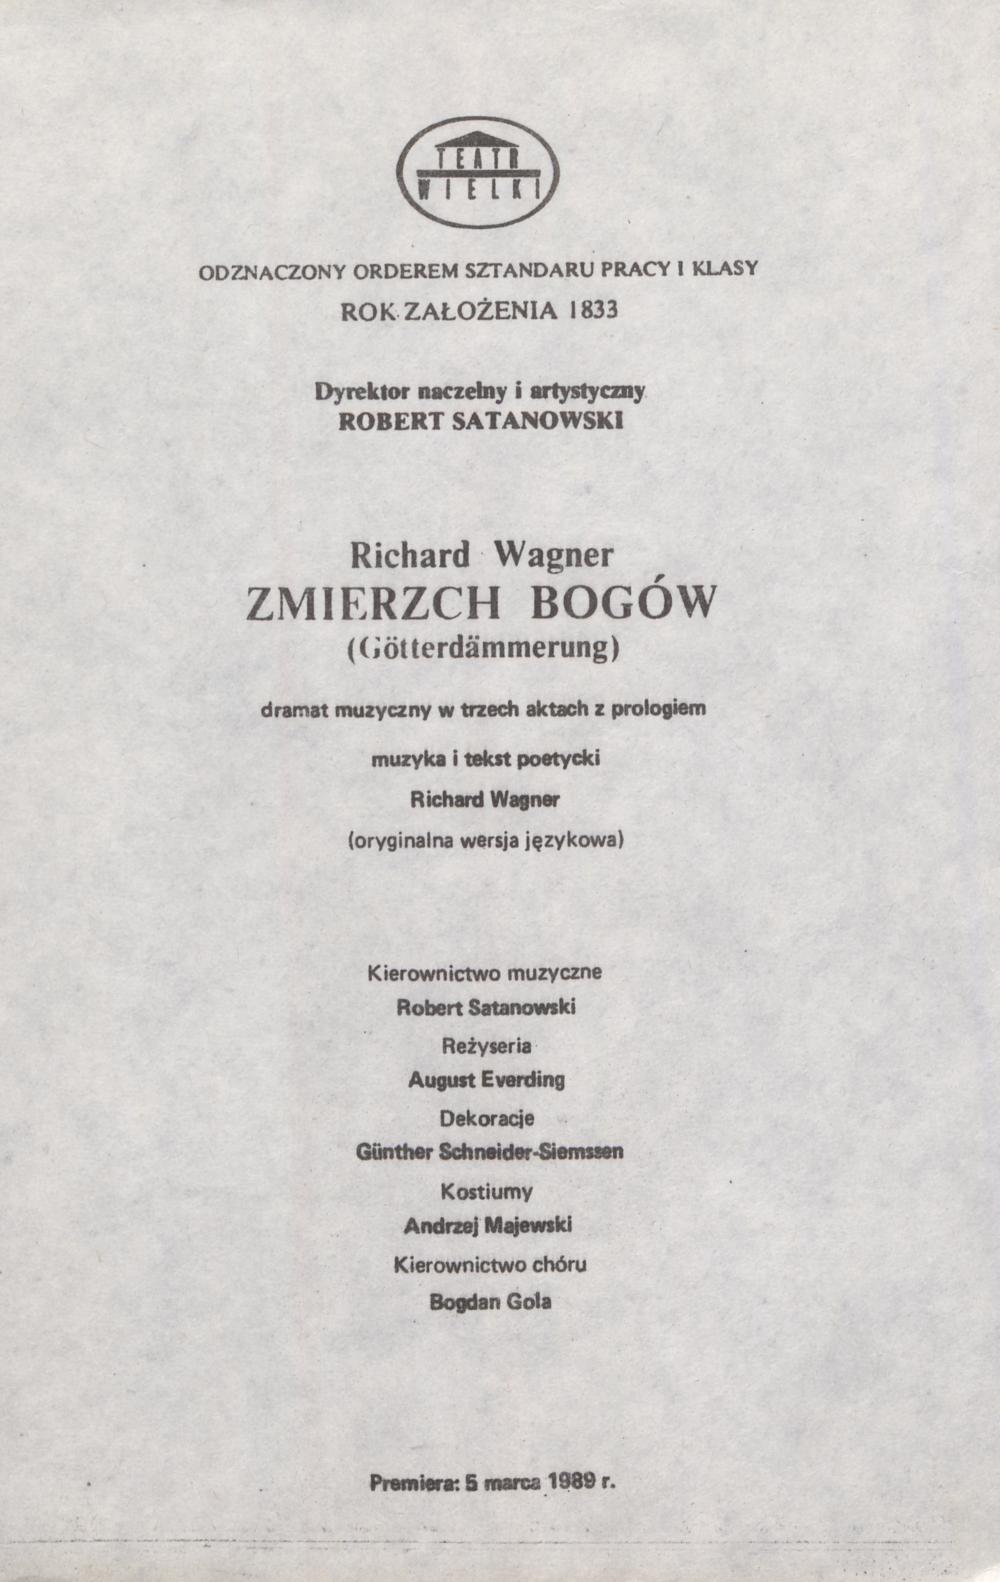 Wkładka obsadowa „Zmierzch bogów” (Götterdämmerung) Richard Wagner 11-05-1989